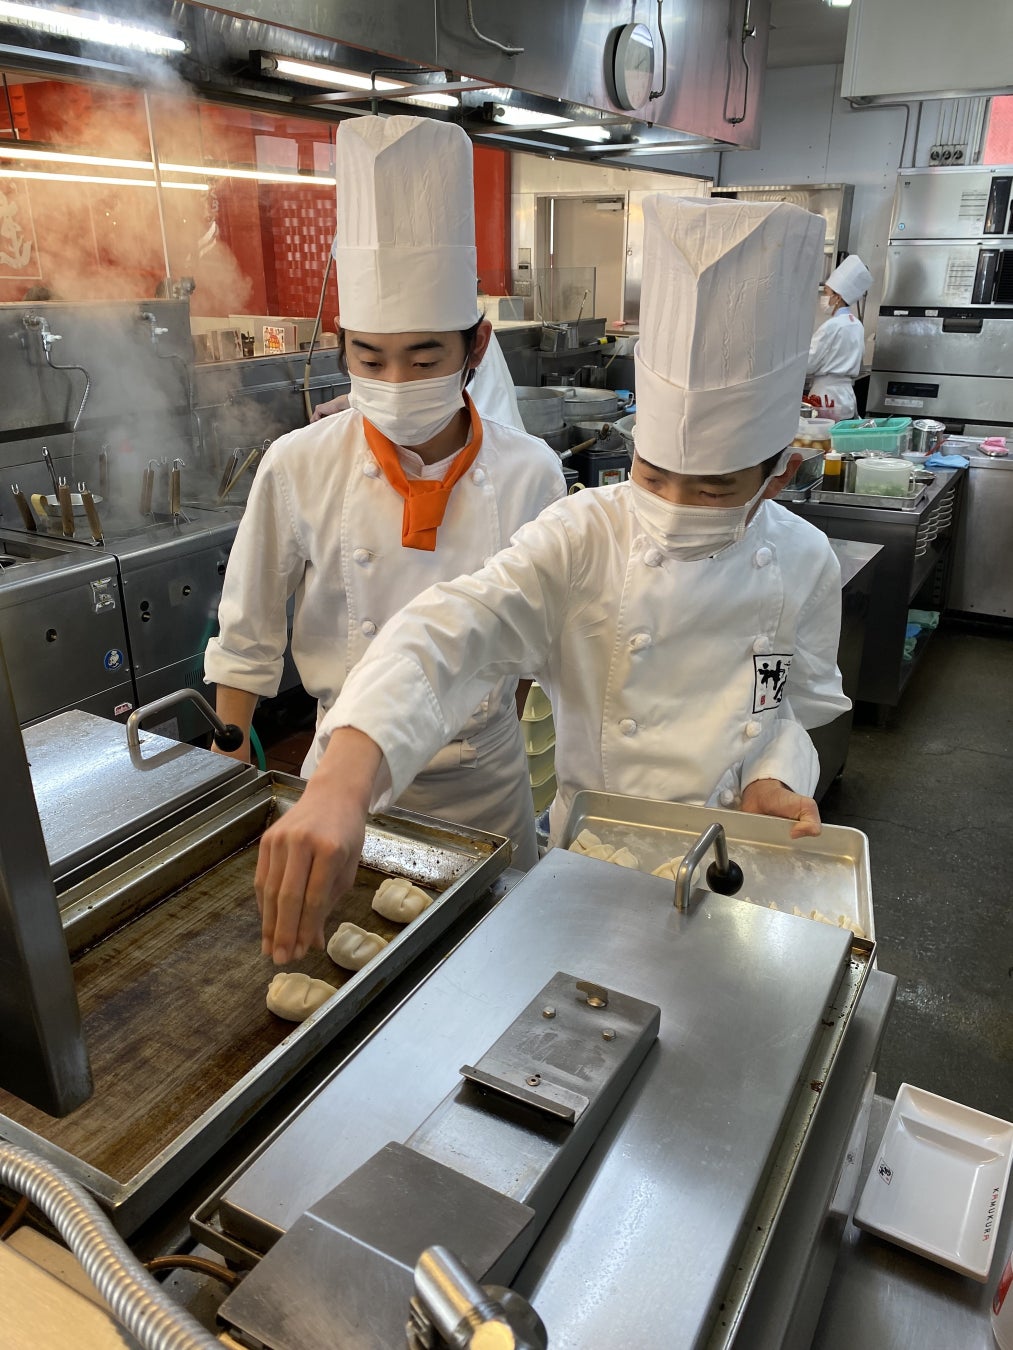 G７広島サミットを契機に広島の食の魅力でグルメ旅行需要を創出する「Eatrip HIROSHIMAキャンペーン」の第四弾を実施中！県内の西洋料理の名店で広島和牛料理が堪能できる！